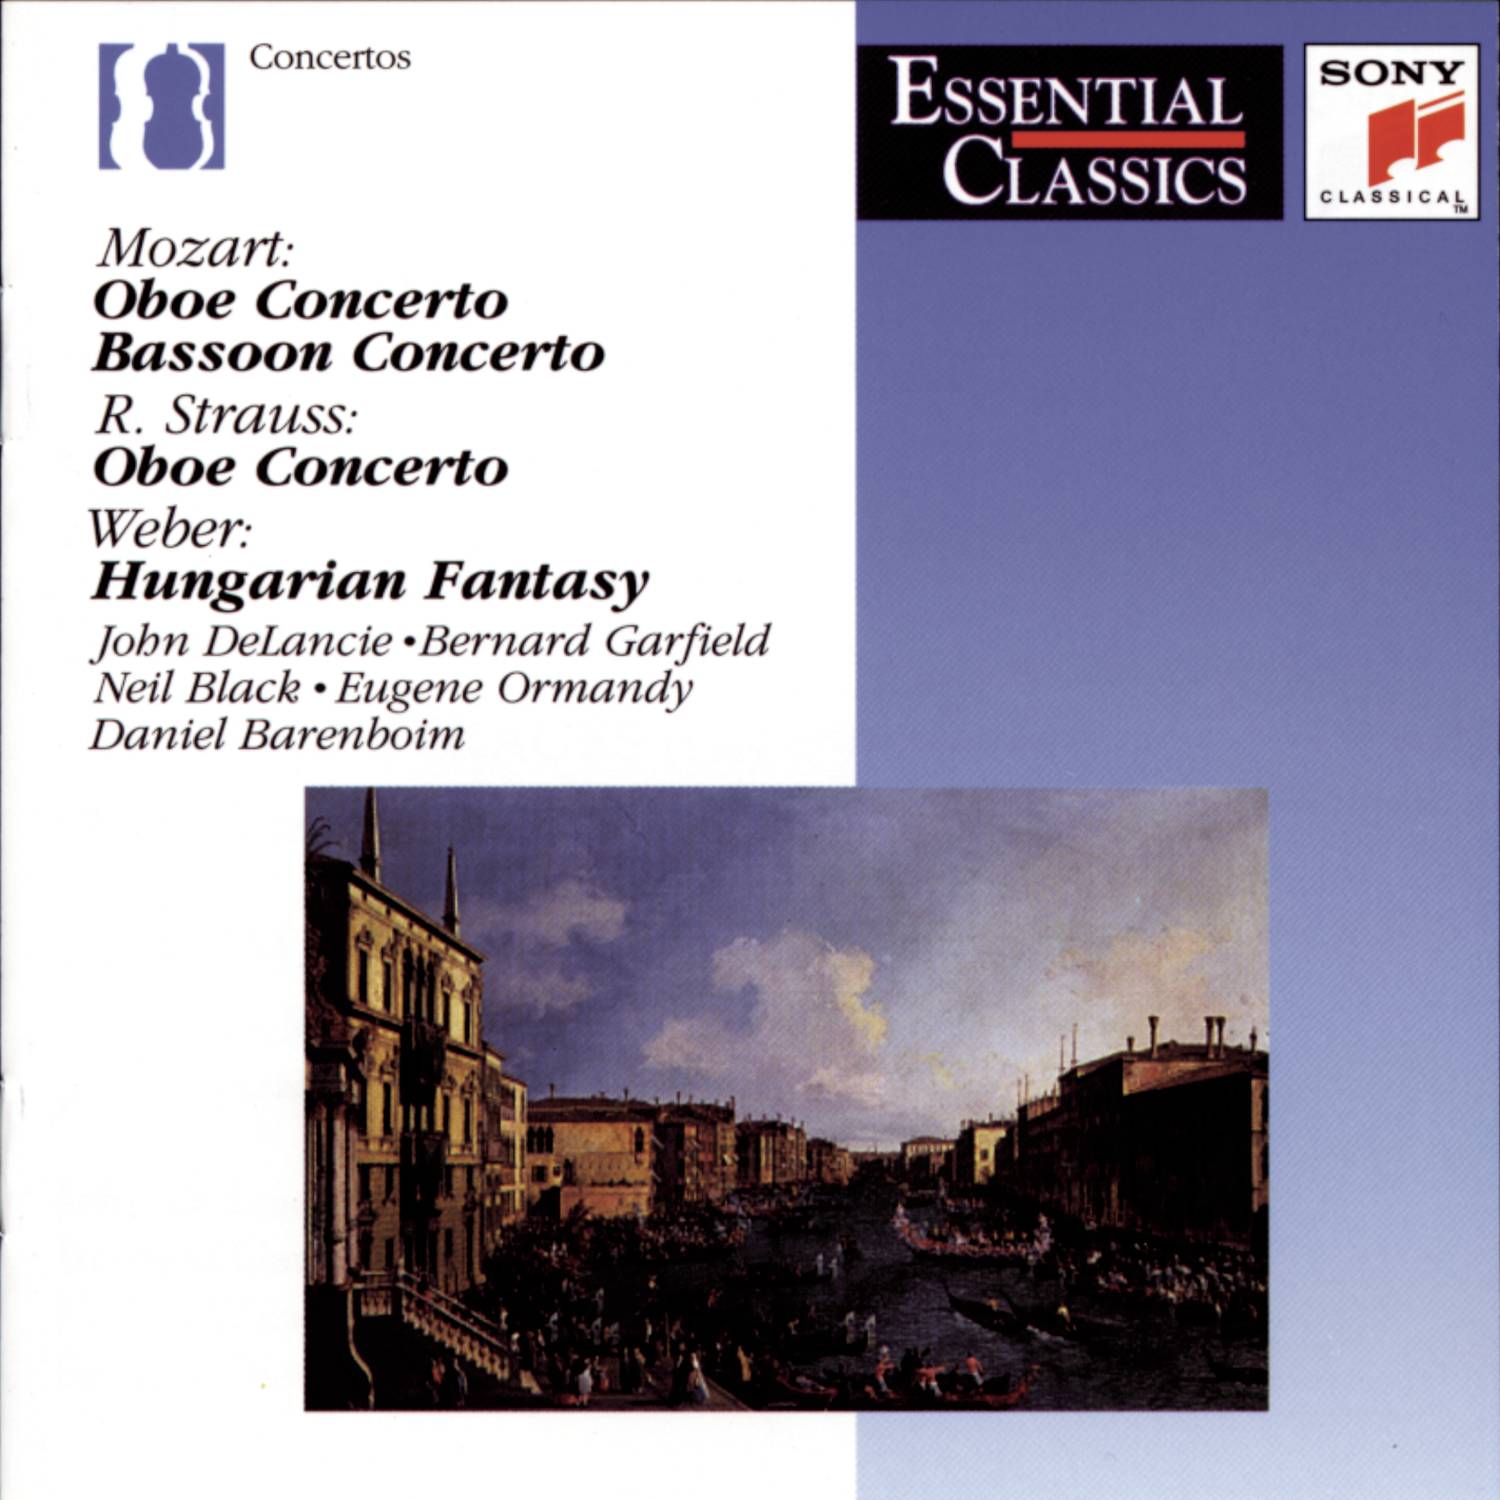 Concerto for Oboe and Orchestra in C Major, K.314 (285d): I. Allegro aperto